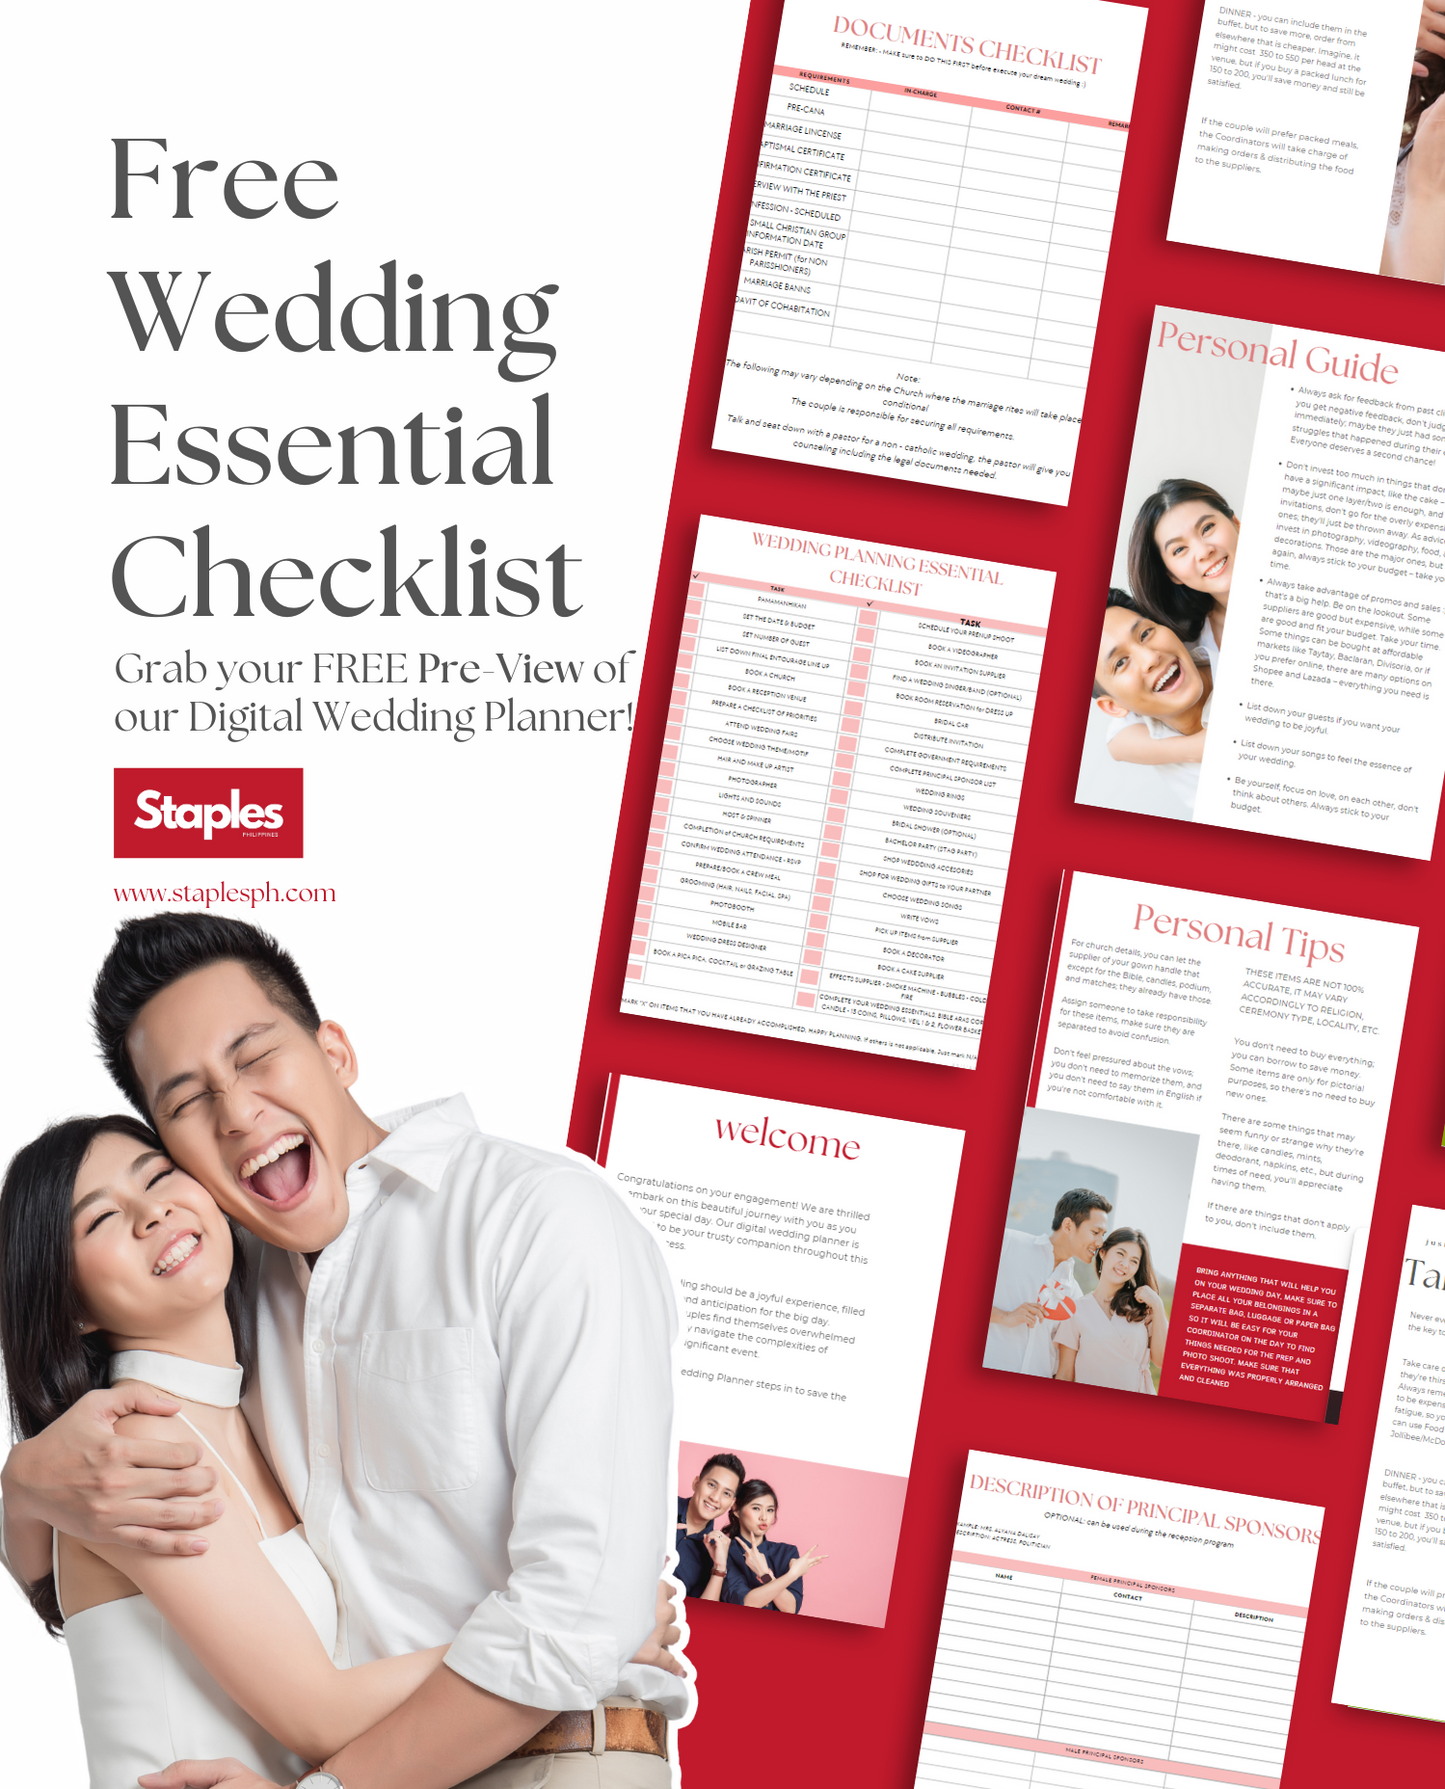 [FREE] Wedding Essentials Checklist + Personal Guide